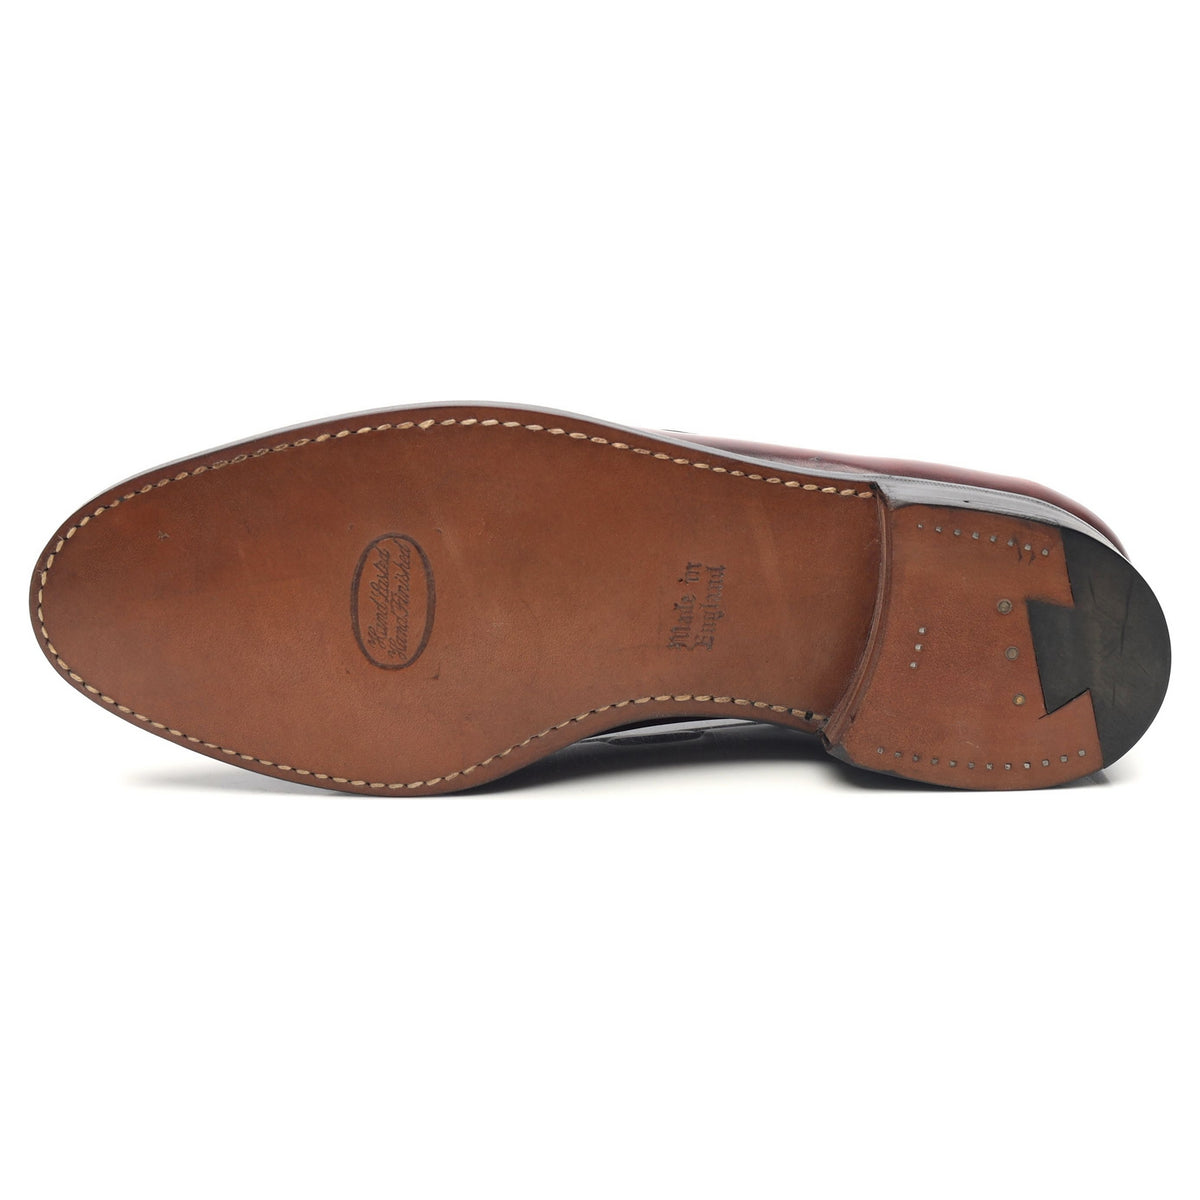 Oxblood Leather Tassel Loafers UK 7 E